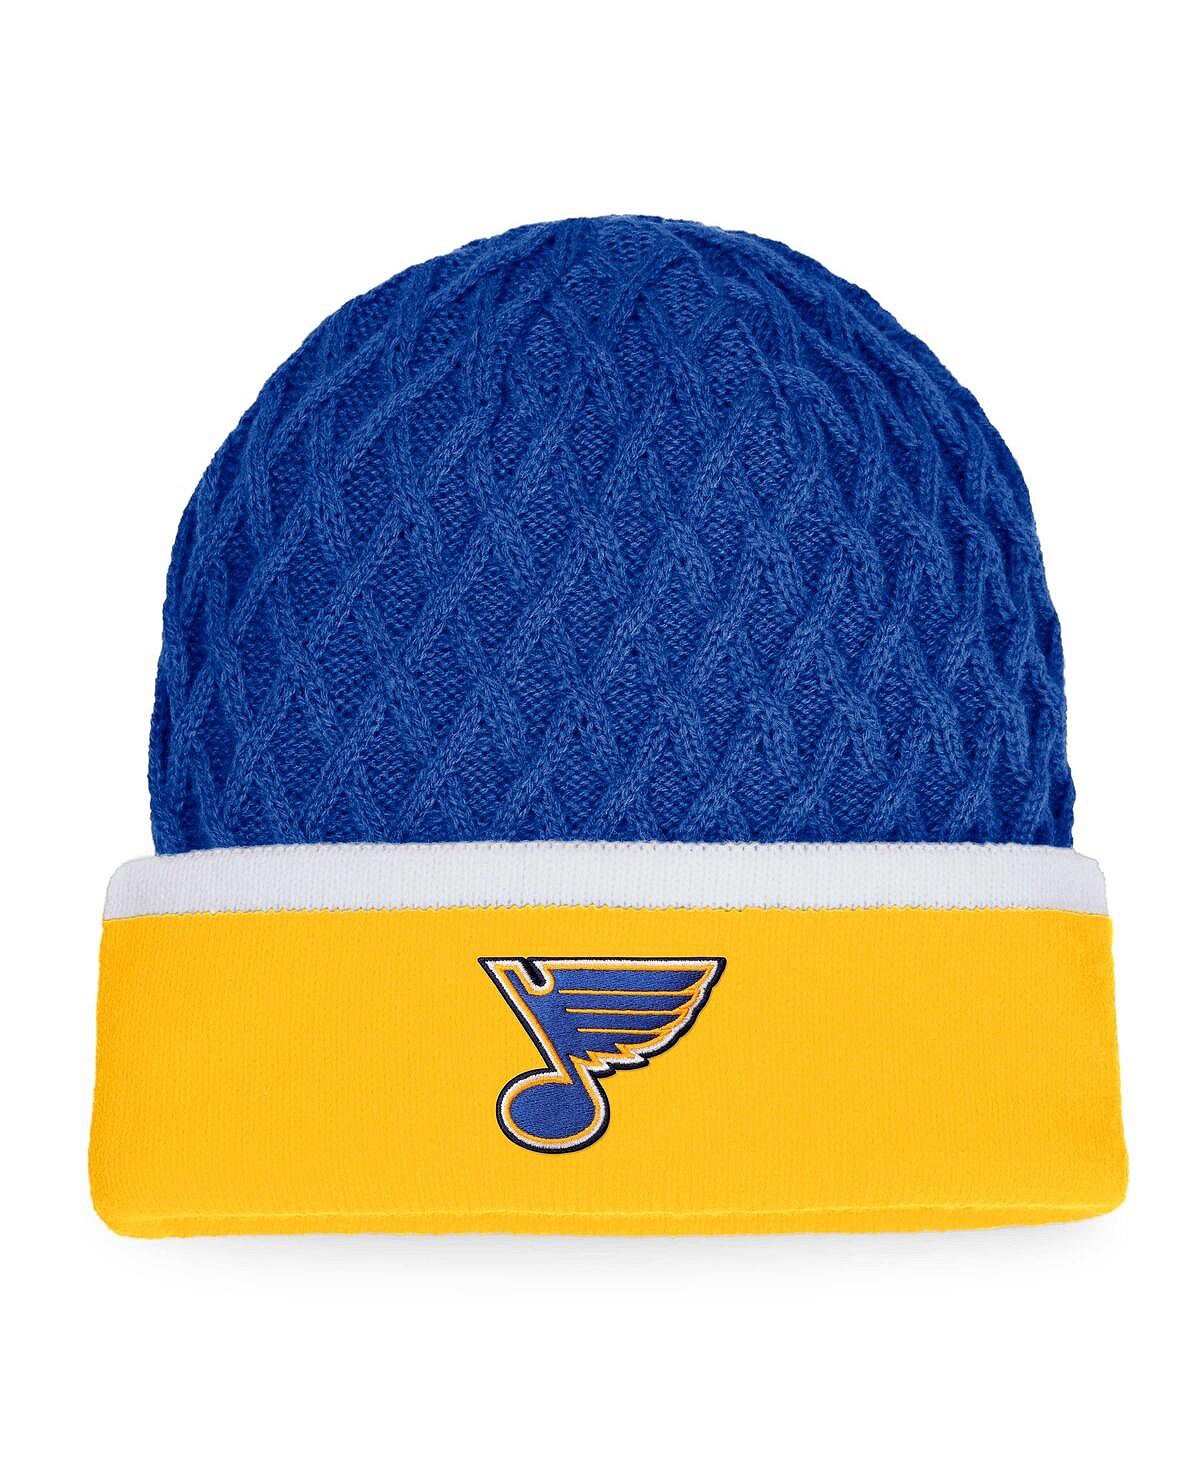 Мужская фирменная золотисто-синяя вязаная шляпа St. Louis Blues Iconic в полоску с манжетами Fanatics серьги blue gold